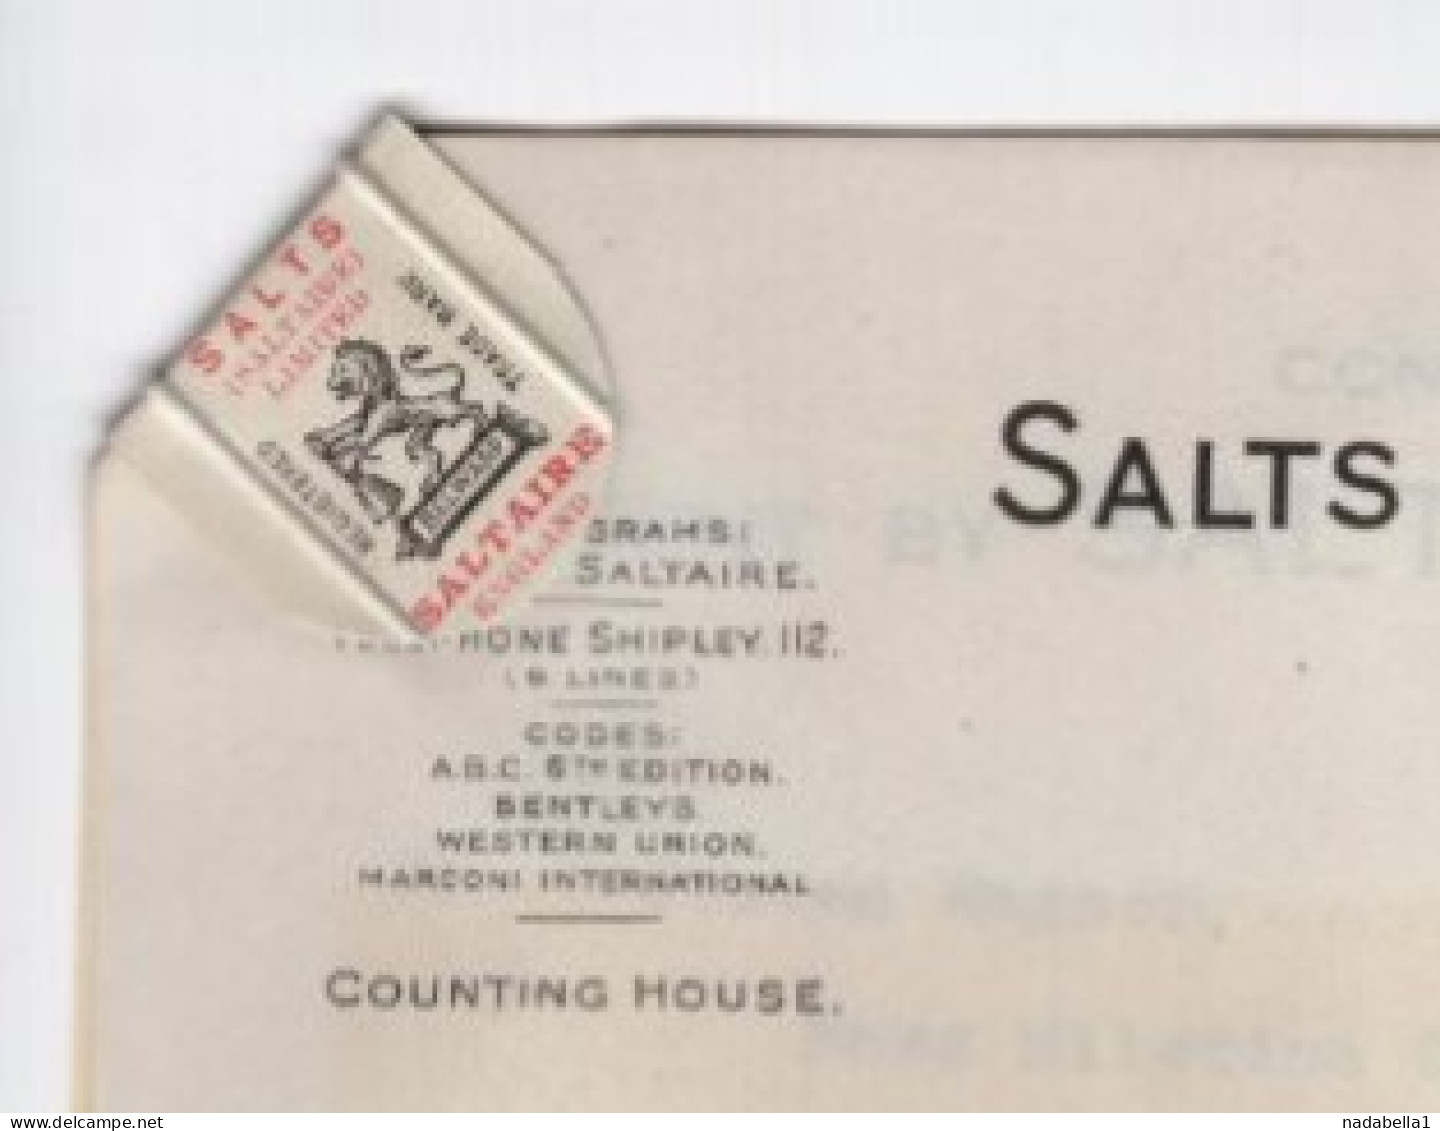 1925.  UNITED KINGDOM,SALTAIRE,SHIPLEY,SALTS LTD. LETTERHEAD,SENT TO SERBIA,TELEGRAM ATTACHED - United Kingdom